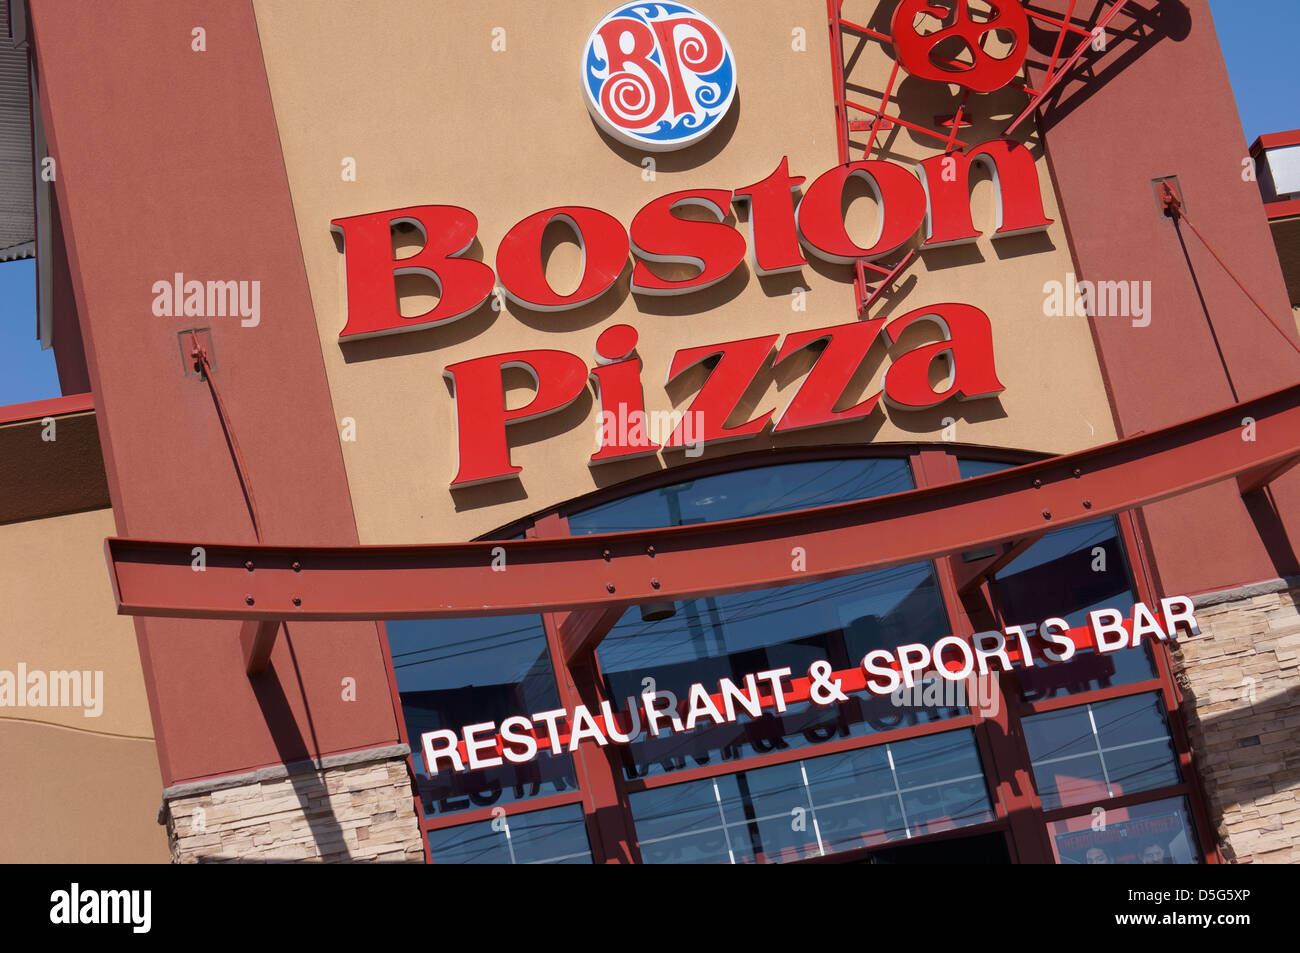 Boston Pizza Restaurant & Sports Bar Banque D'Images